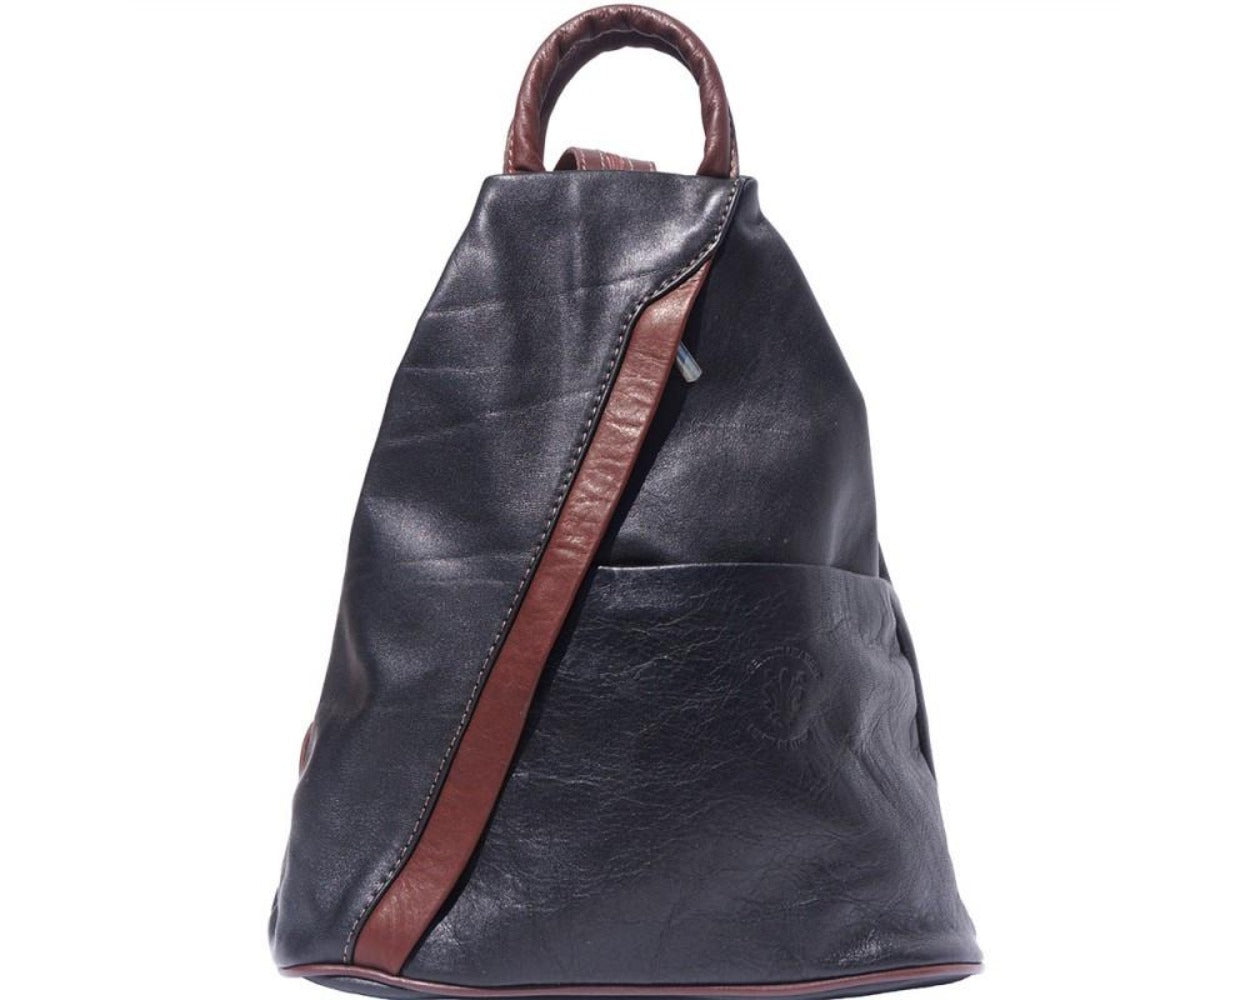 LaGaksta Submedium Italian Leather Backpack Purse and Shoulder Bag - LaGaksta Handbags -  Backpack - 4